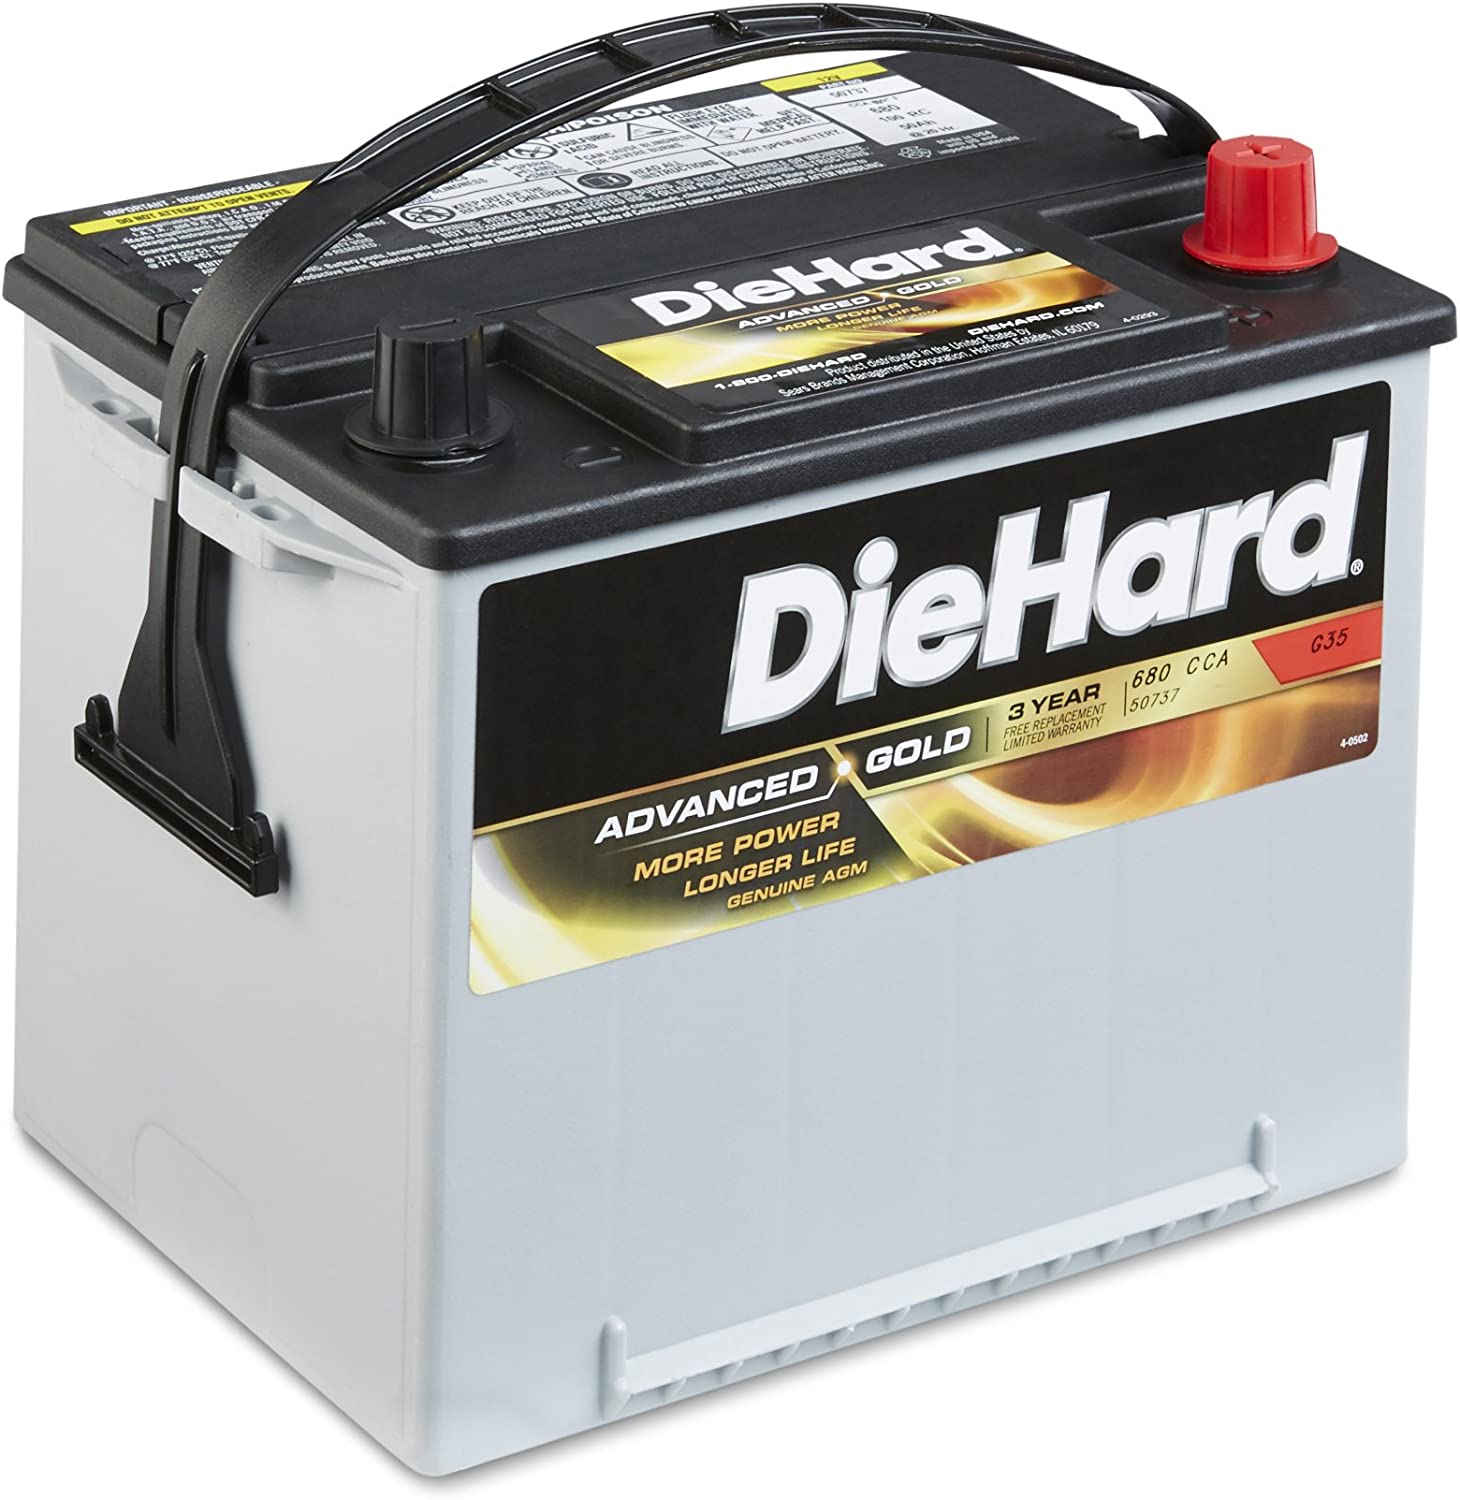 Amazon.com: DieHard 38275 Advanced Gold AGM Battery